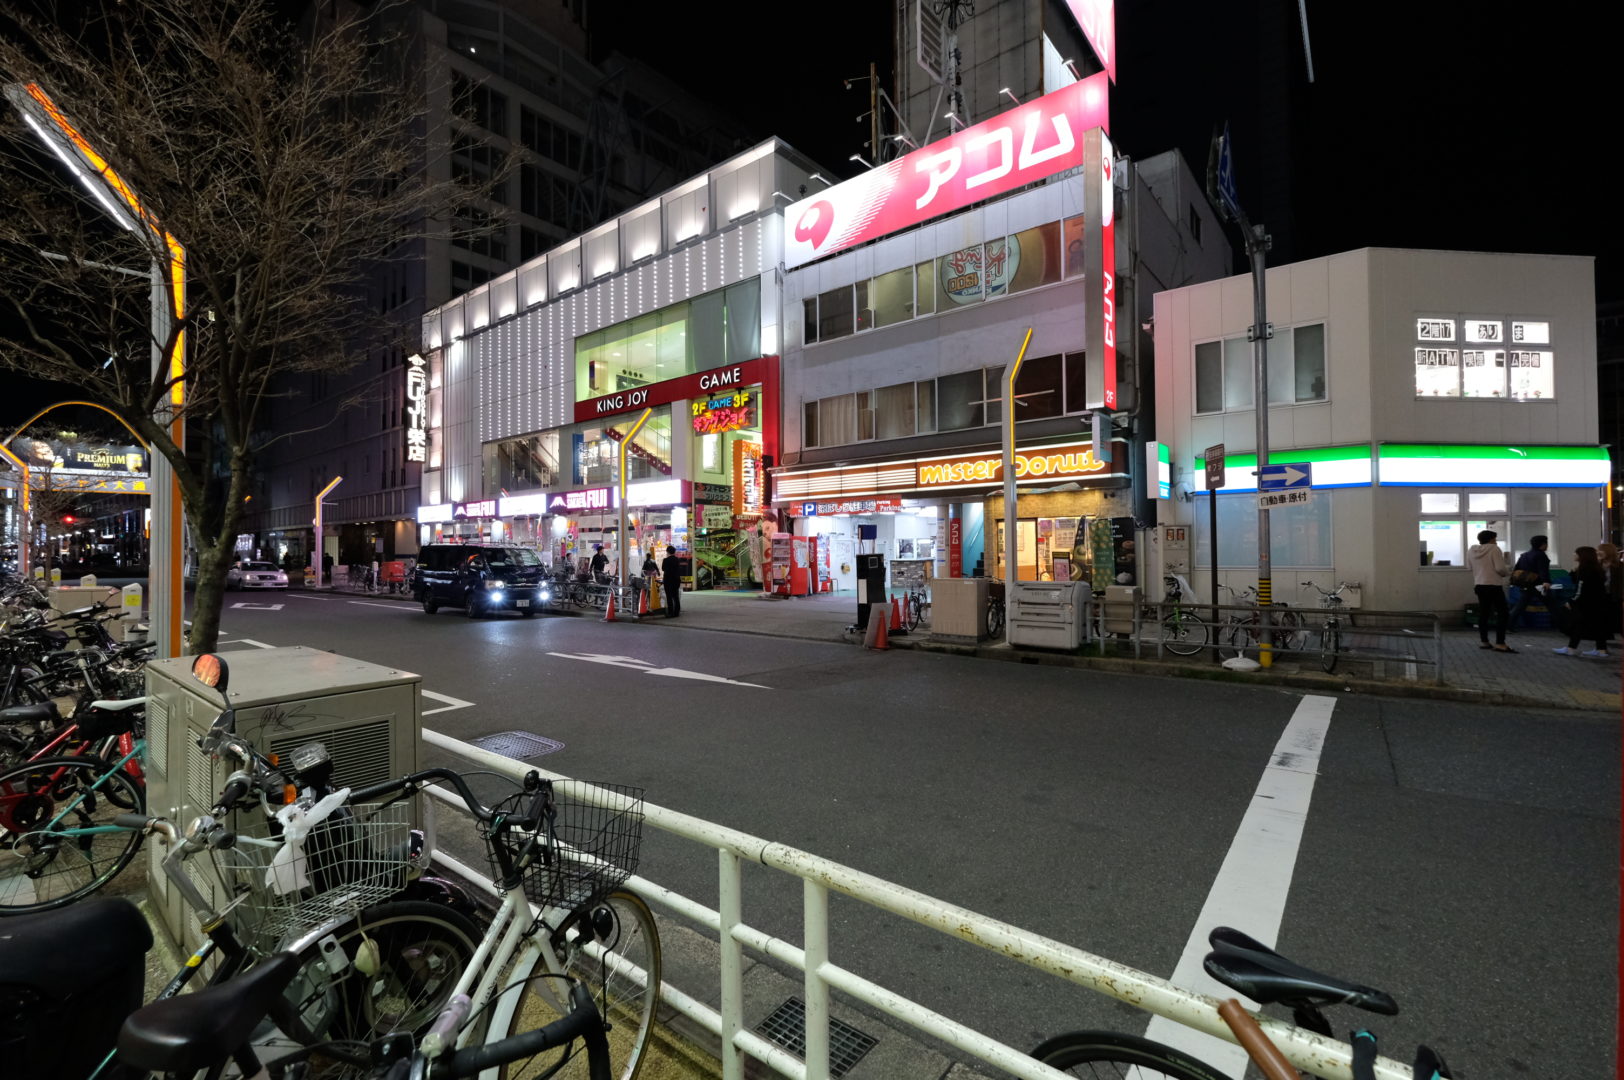 A night scene from the Sakae District in Nagoya Japan